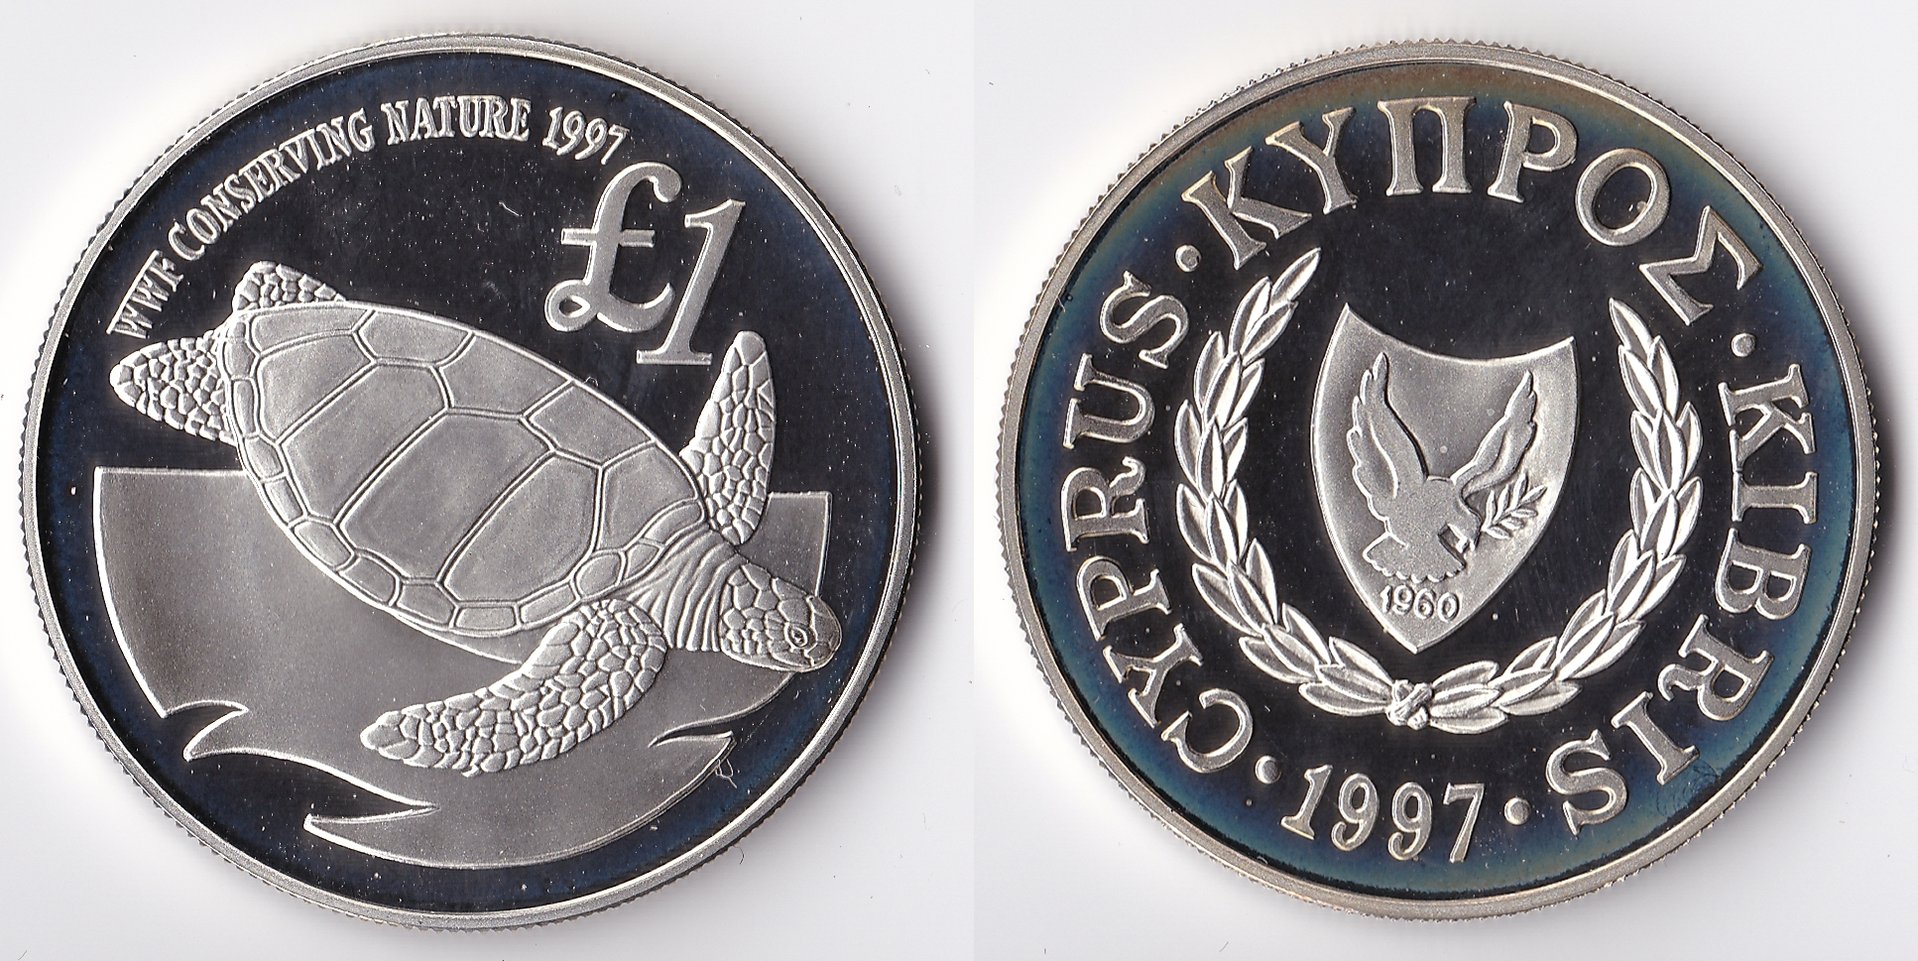 1997 cyprus 1 pound.jpg